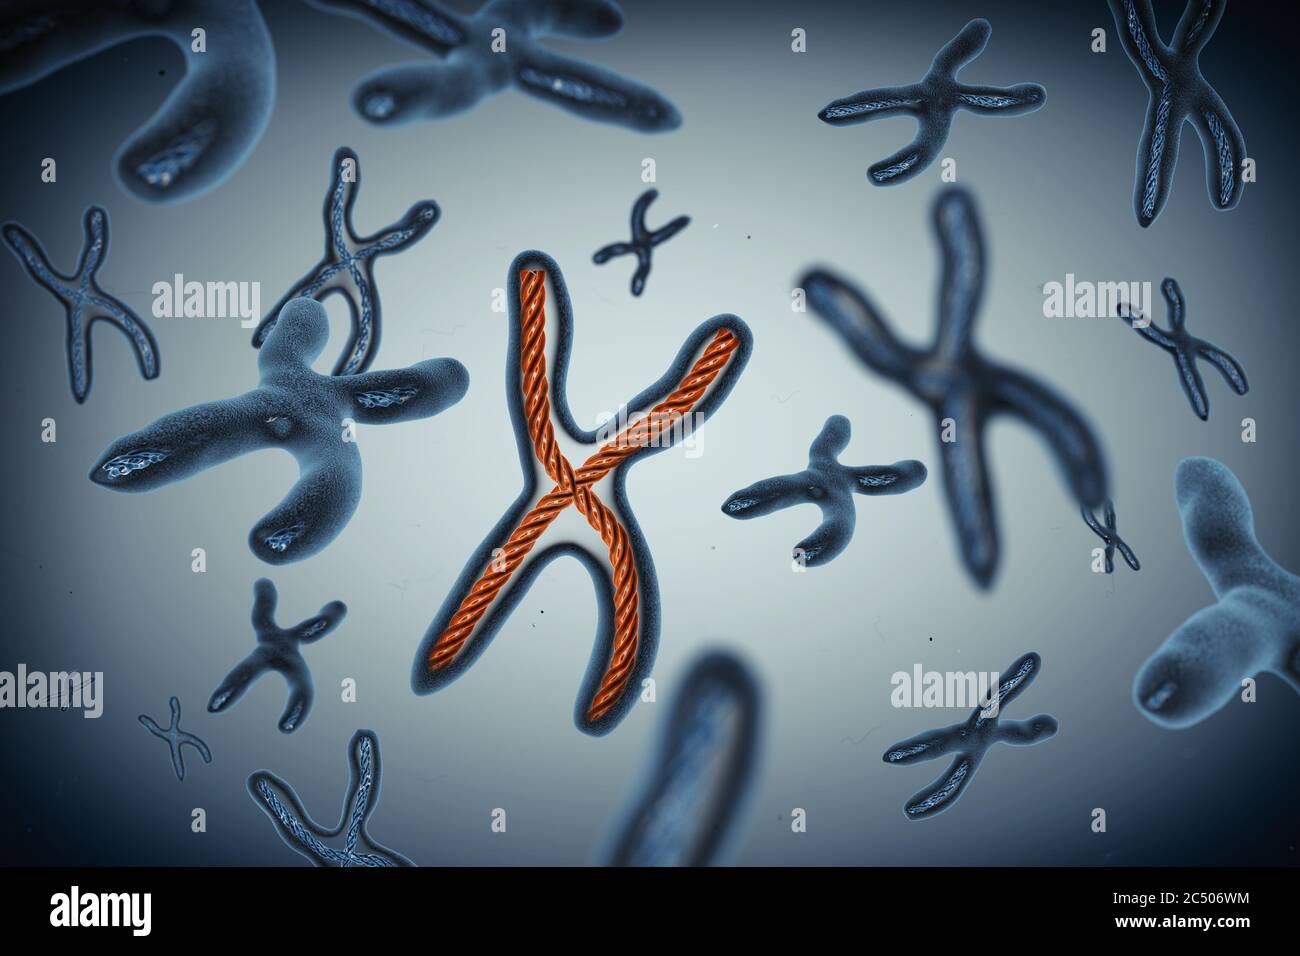 Many Chromosomes extreme closeup. 3d Rendering. Stock Photo